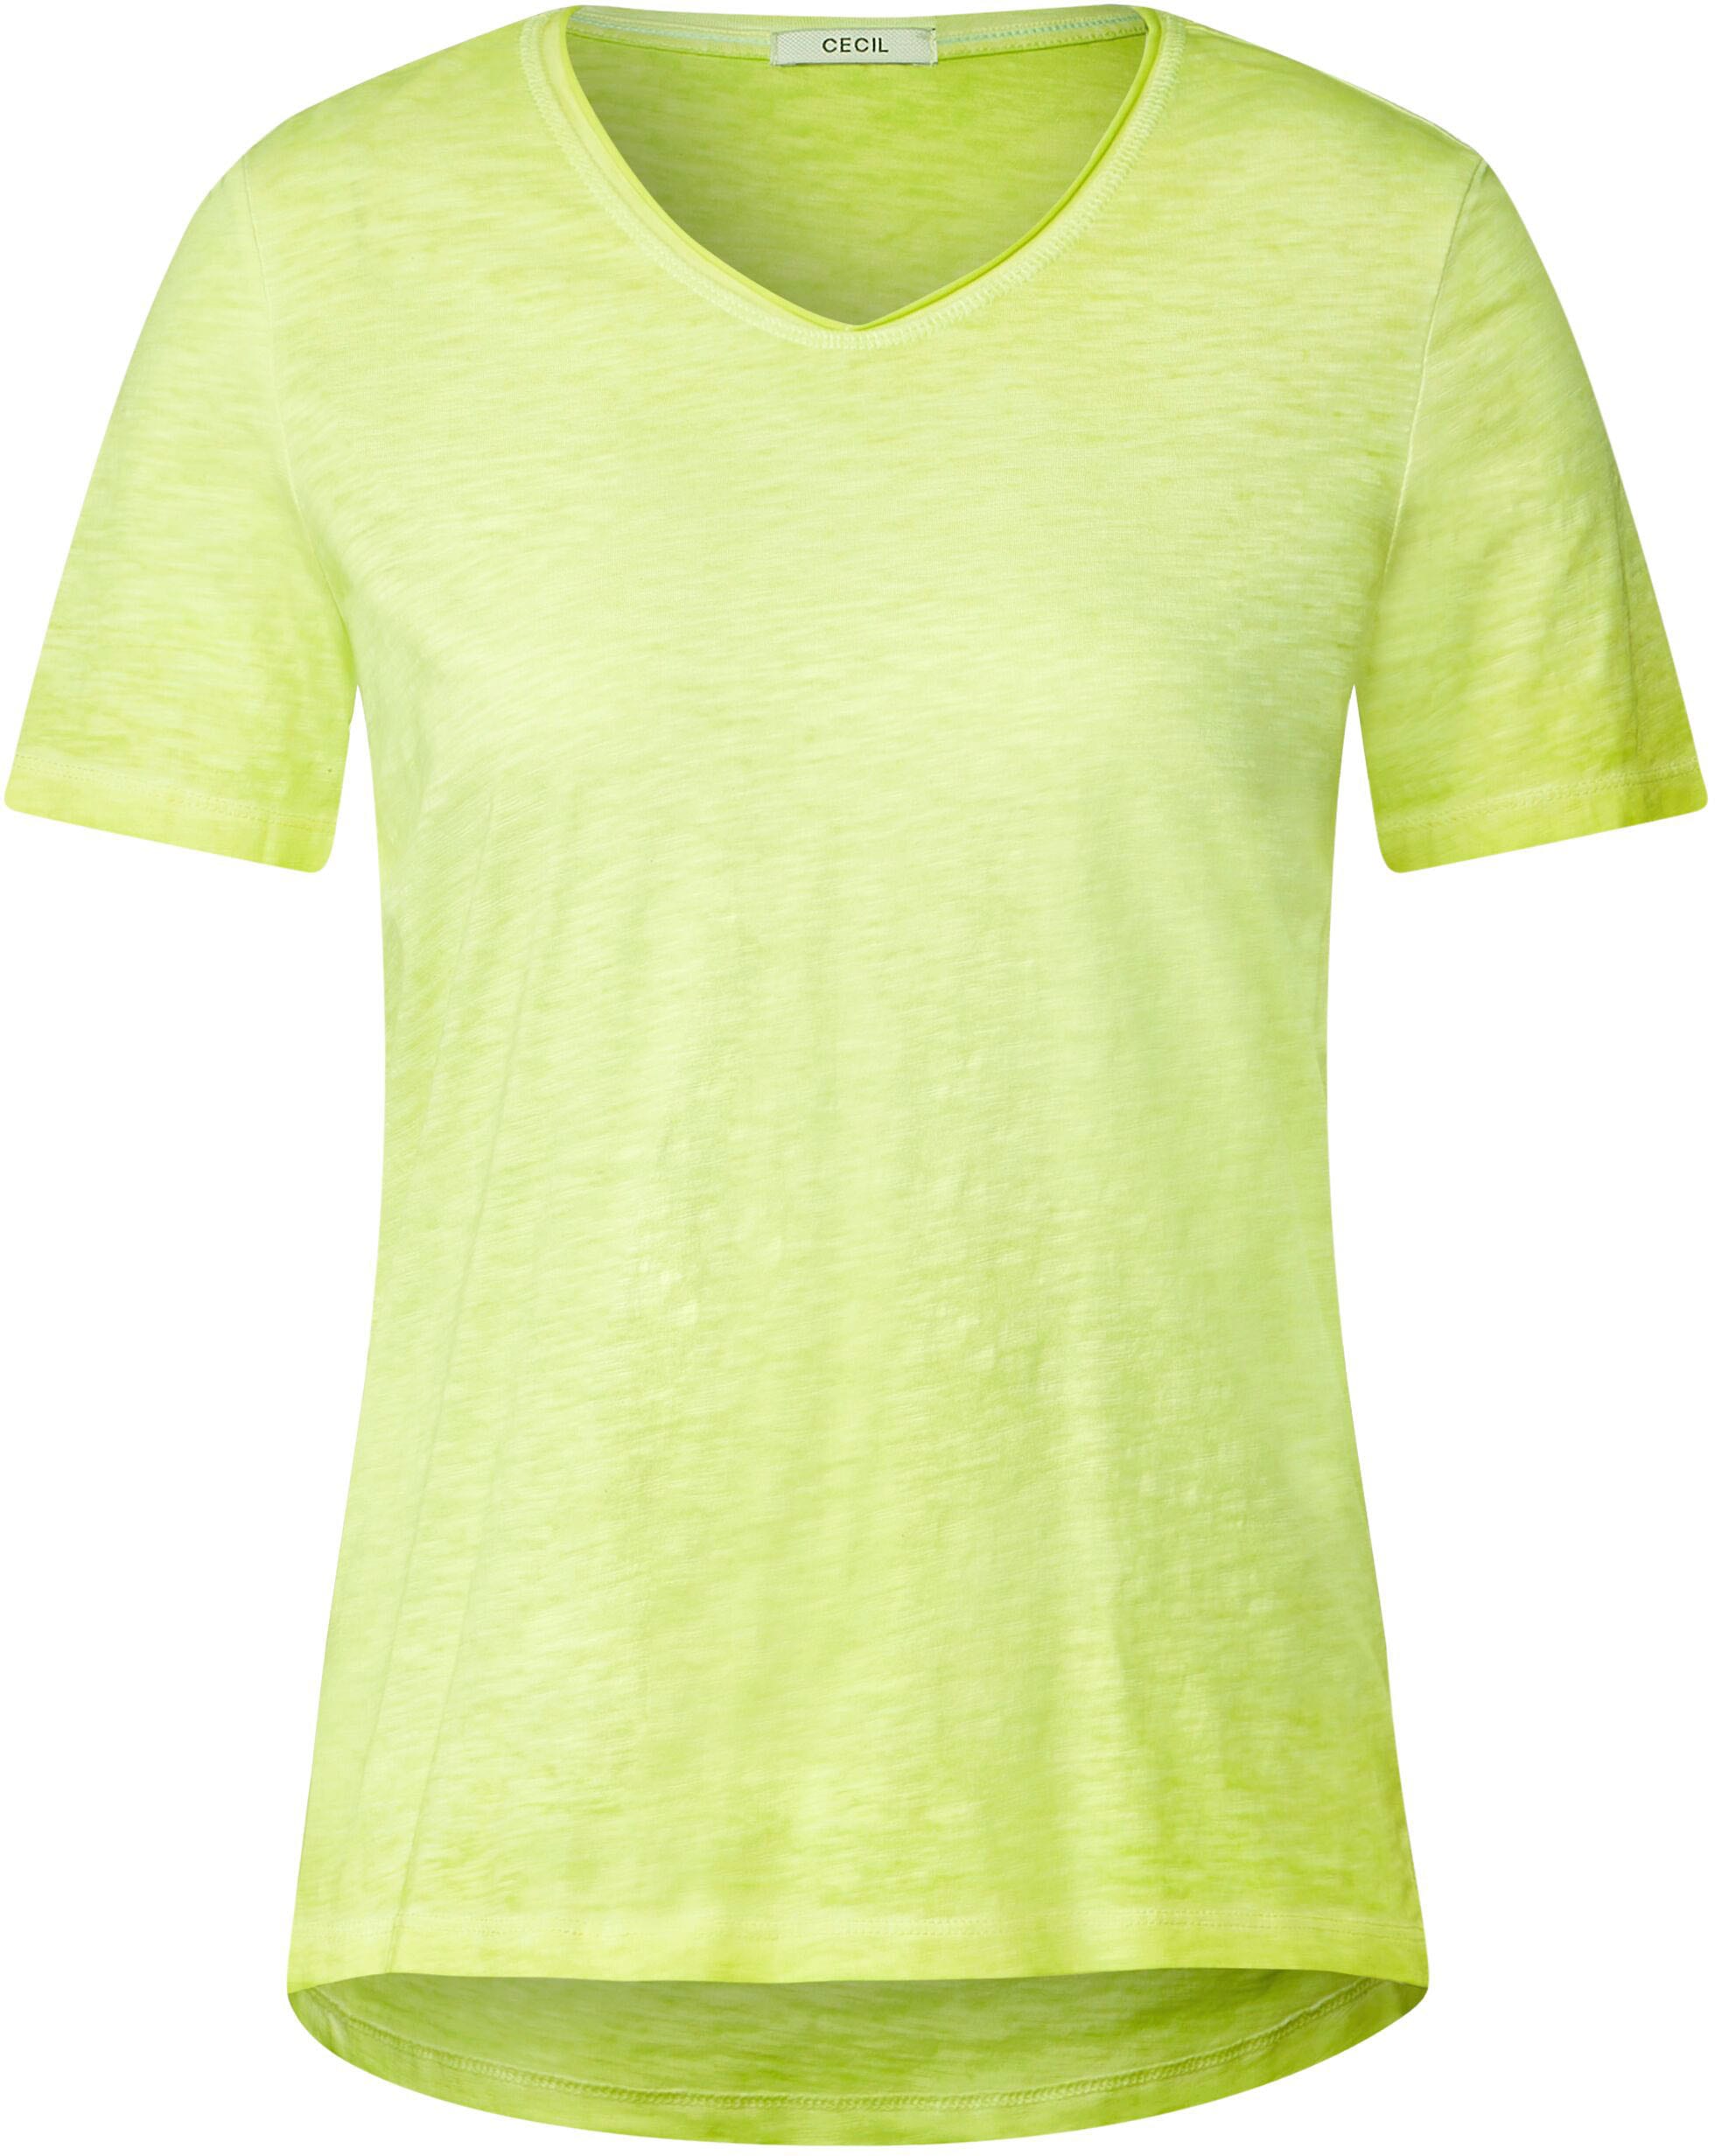 Acheter in trendiger Cecil Flammgarn-Optik T-Shirt, simplement